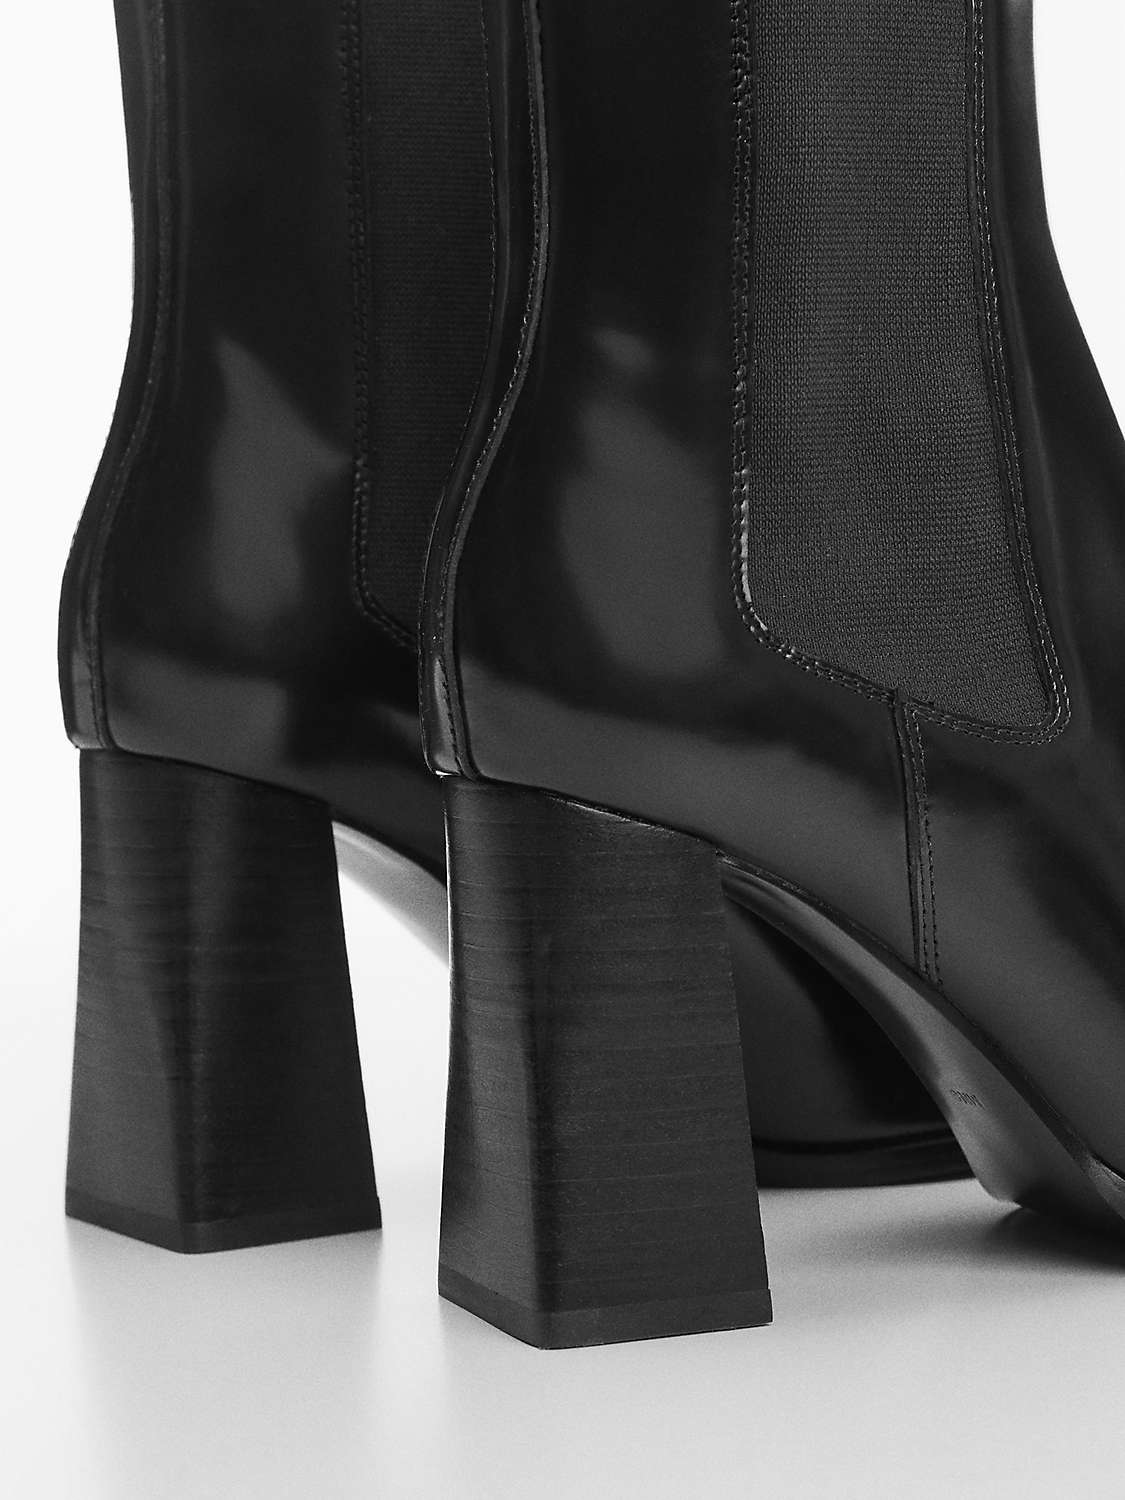 Mango Subte Leather Block Heel Ankle Boots, Black at John Lewis & Partners